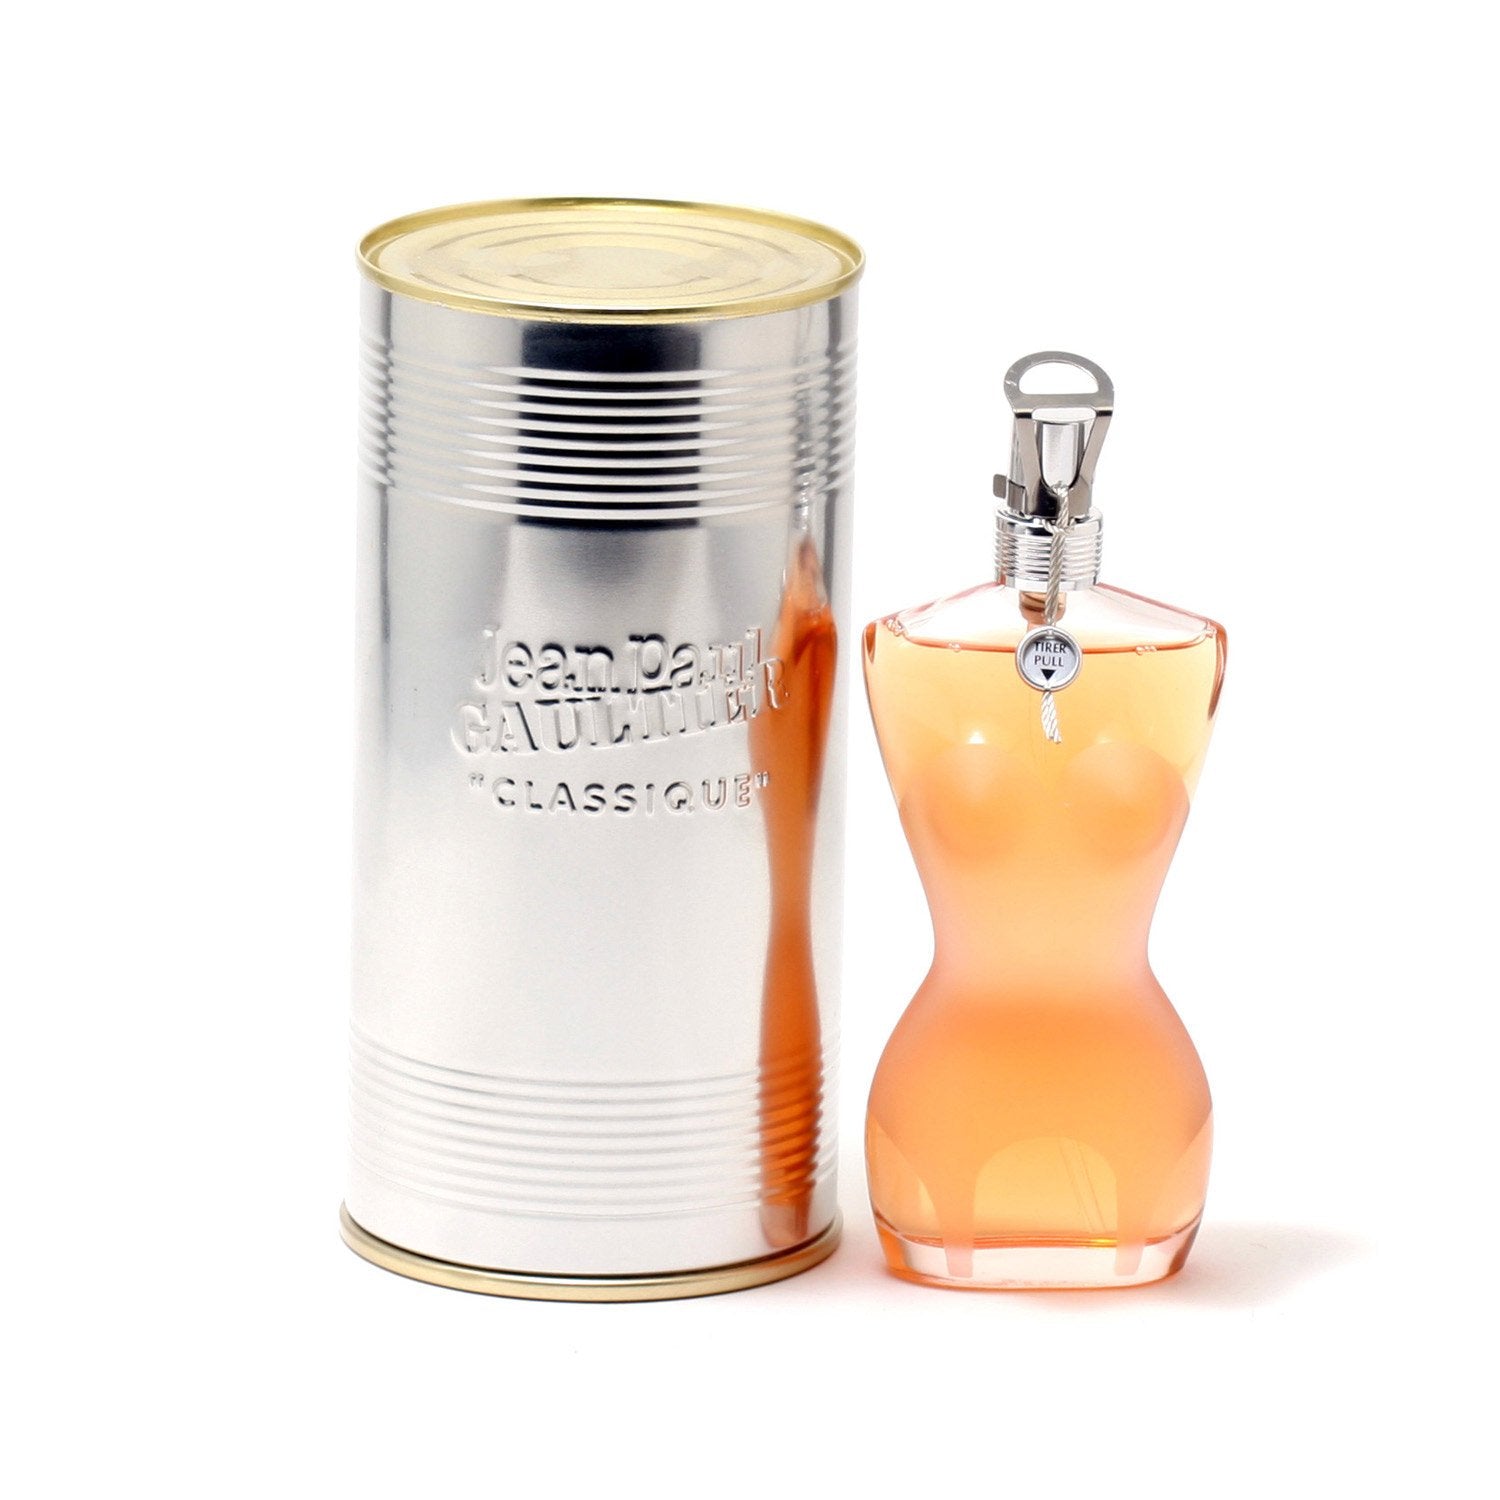 Perfume - JEAN PAUL GAULTIER CLASSIQUE FOR WOMEN - EAU DE TOILETTE SPRAY